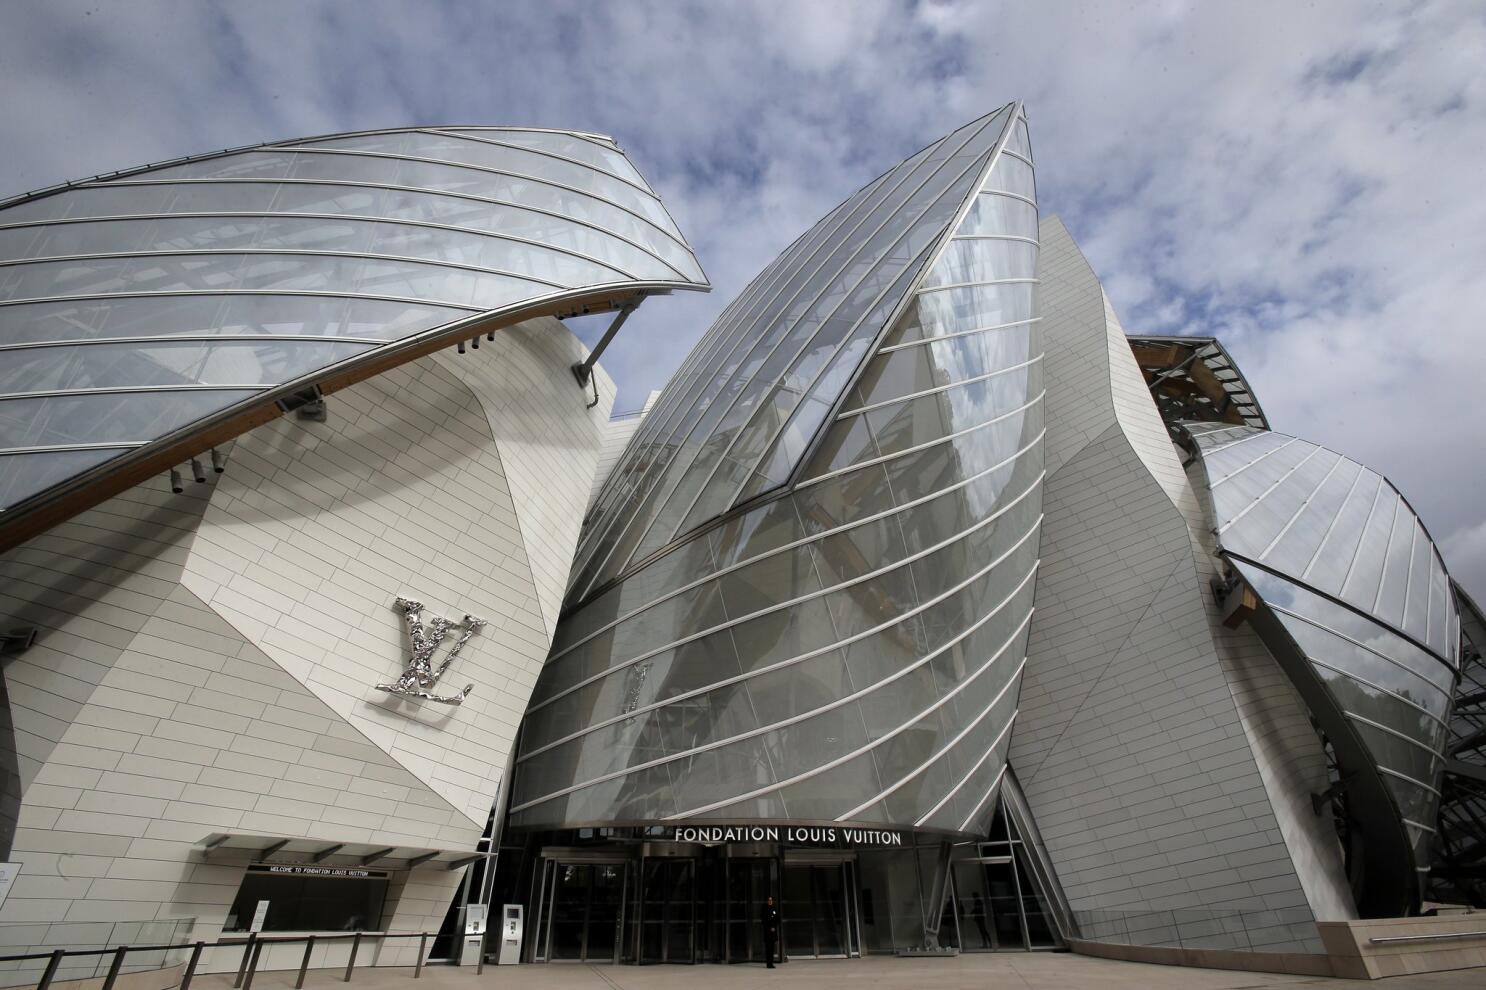 Daniel Buren Transforms the Fondation Louis Vuitton to an